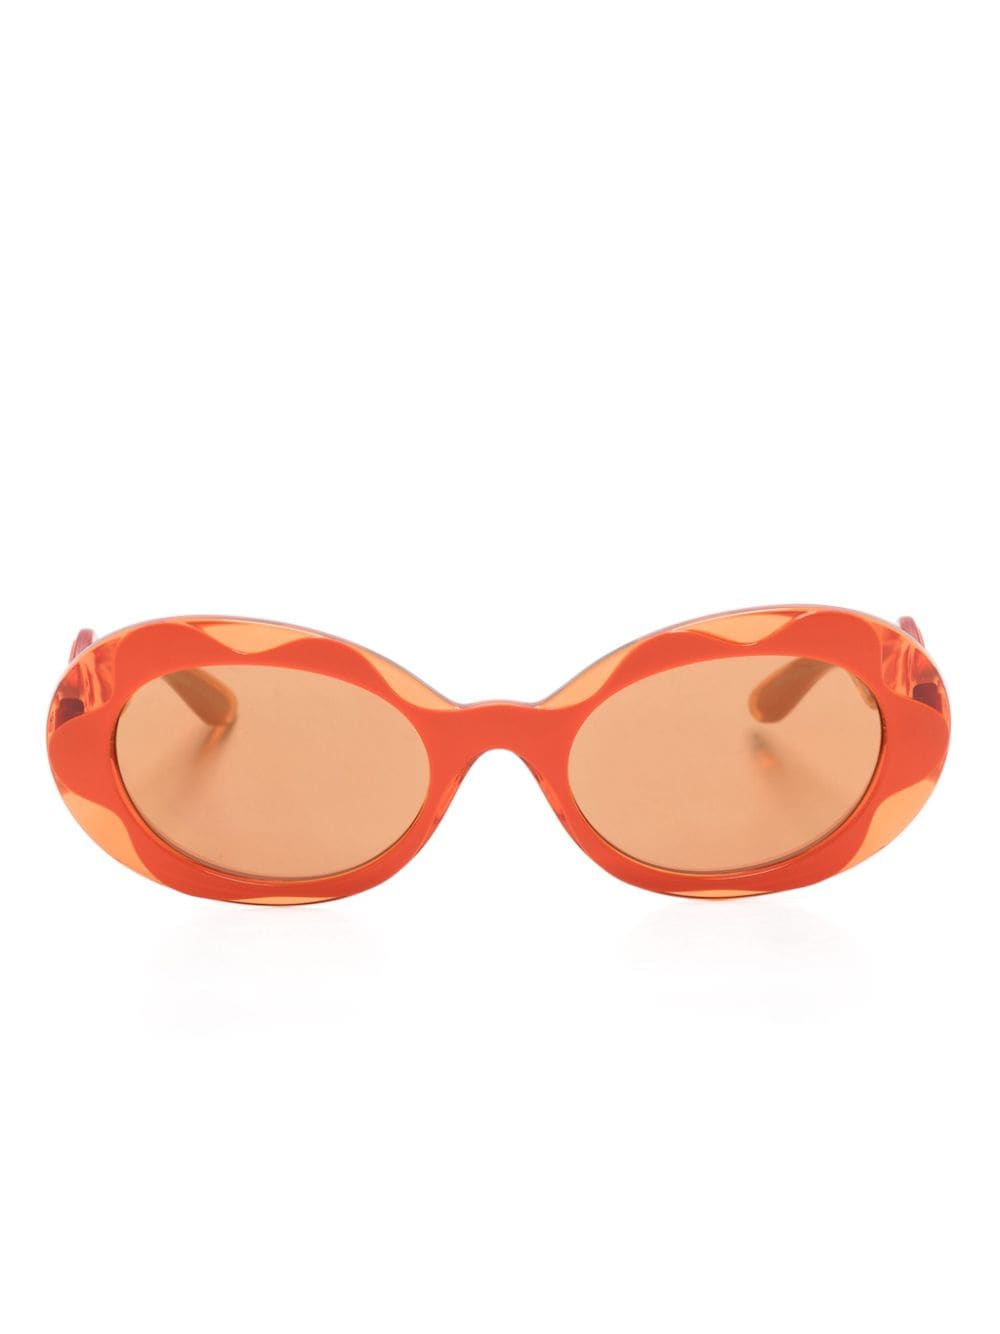 dolce & gabbana eyewear lunettes de soleil à monture ovale - orange